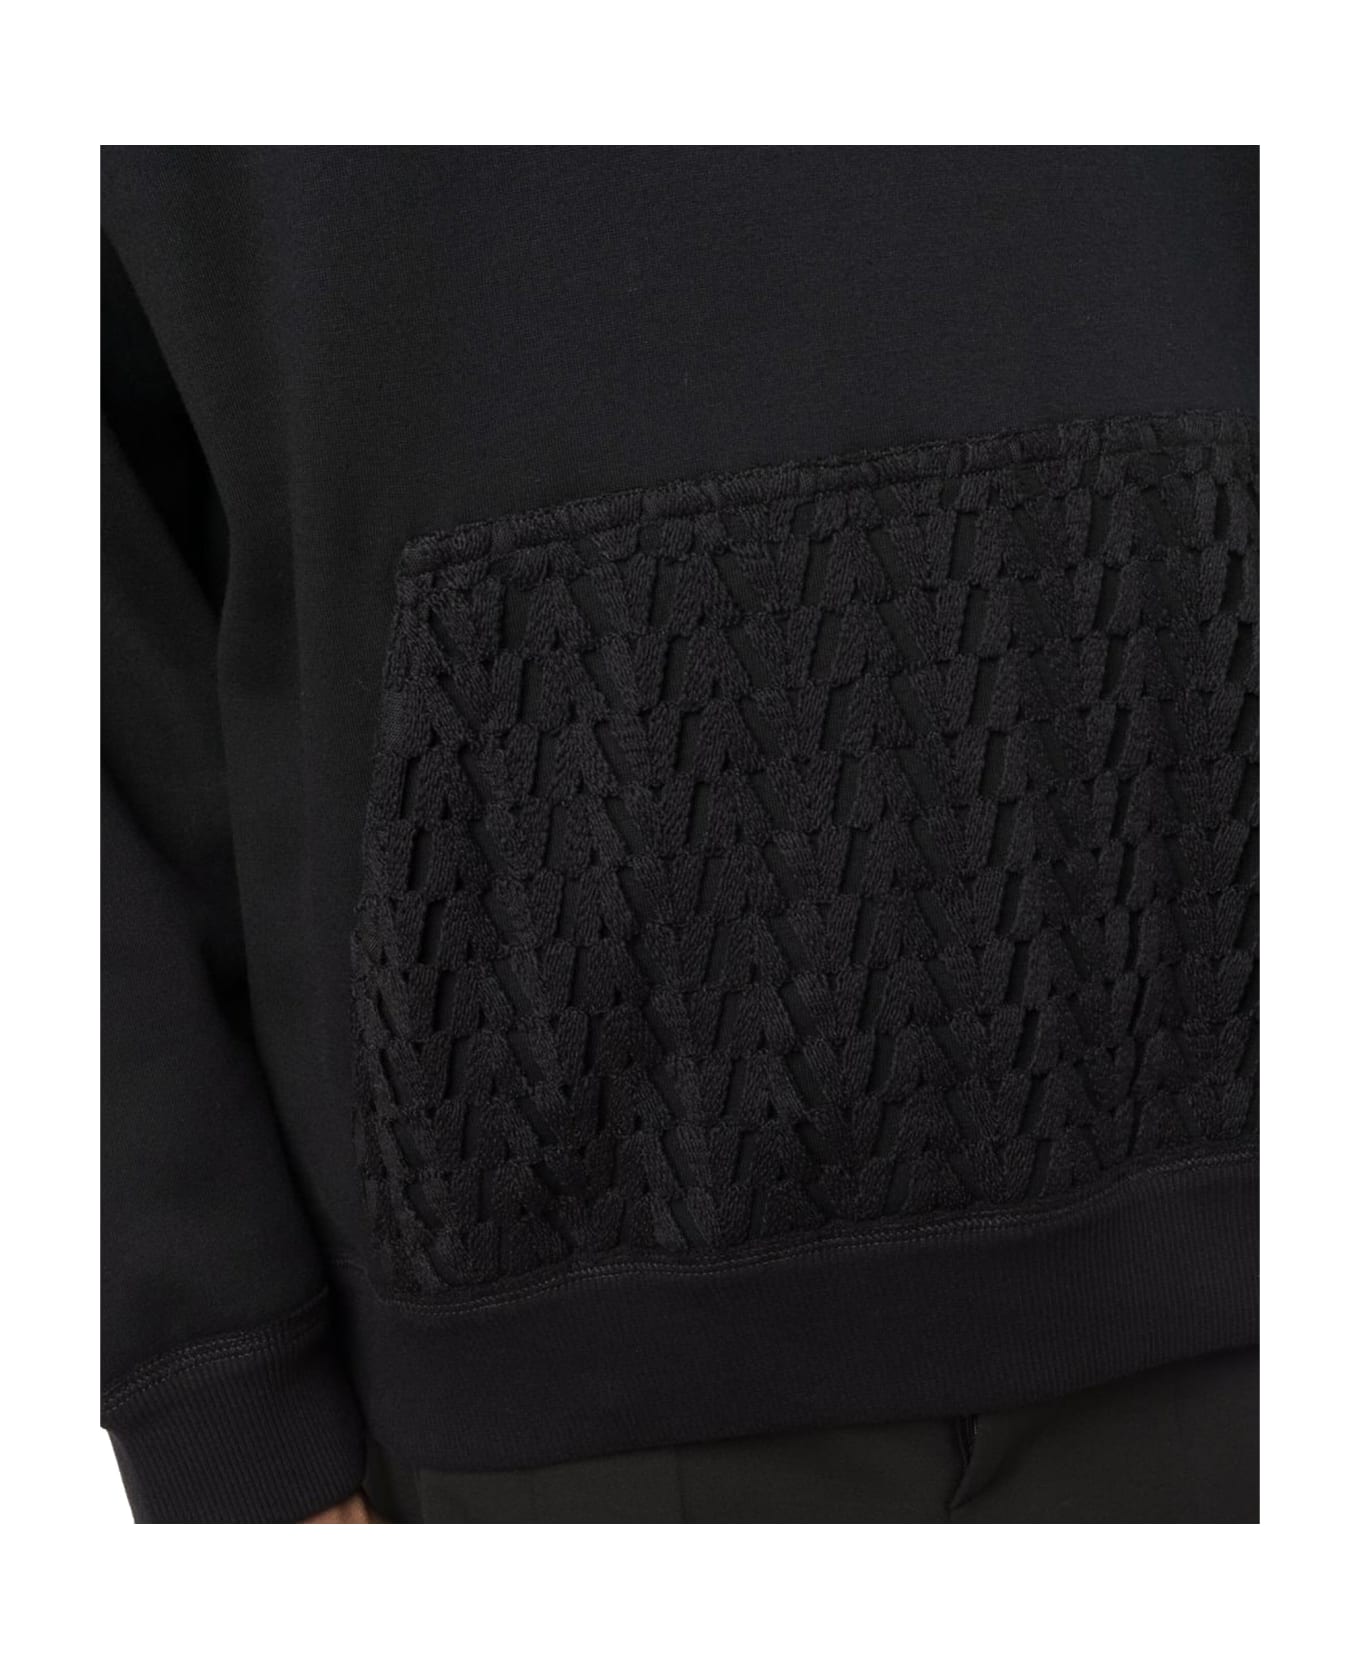 Valentino Wonderland Knitted Hooded Sweatshirt - Black